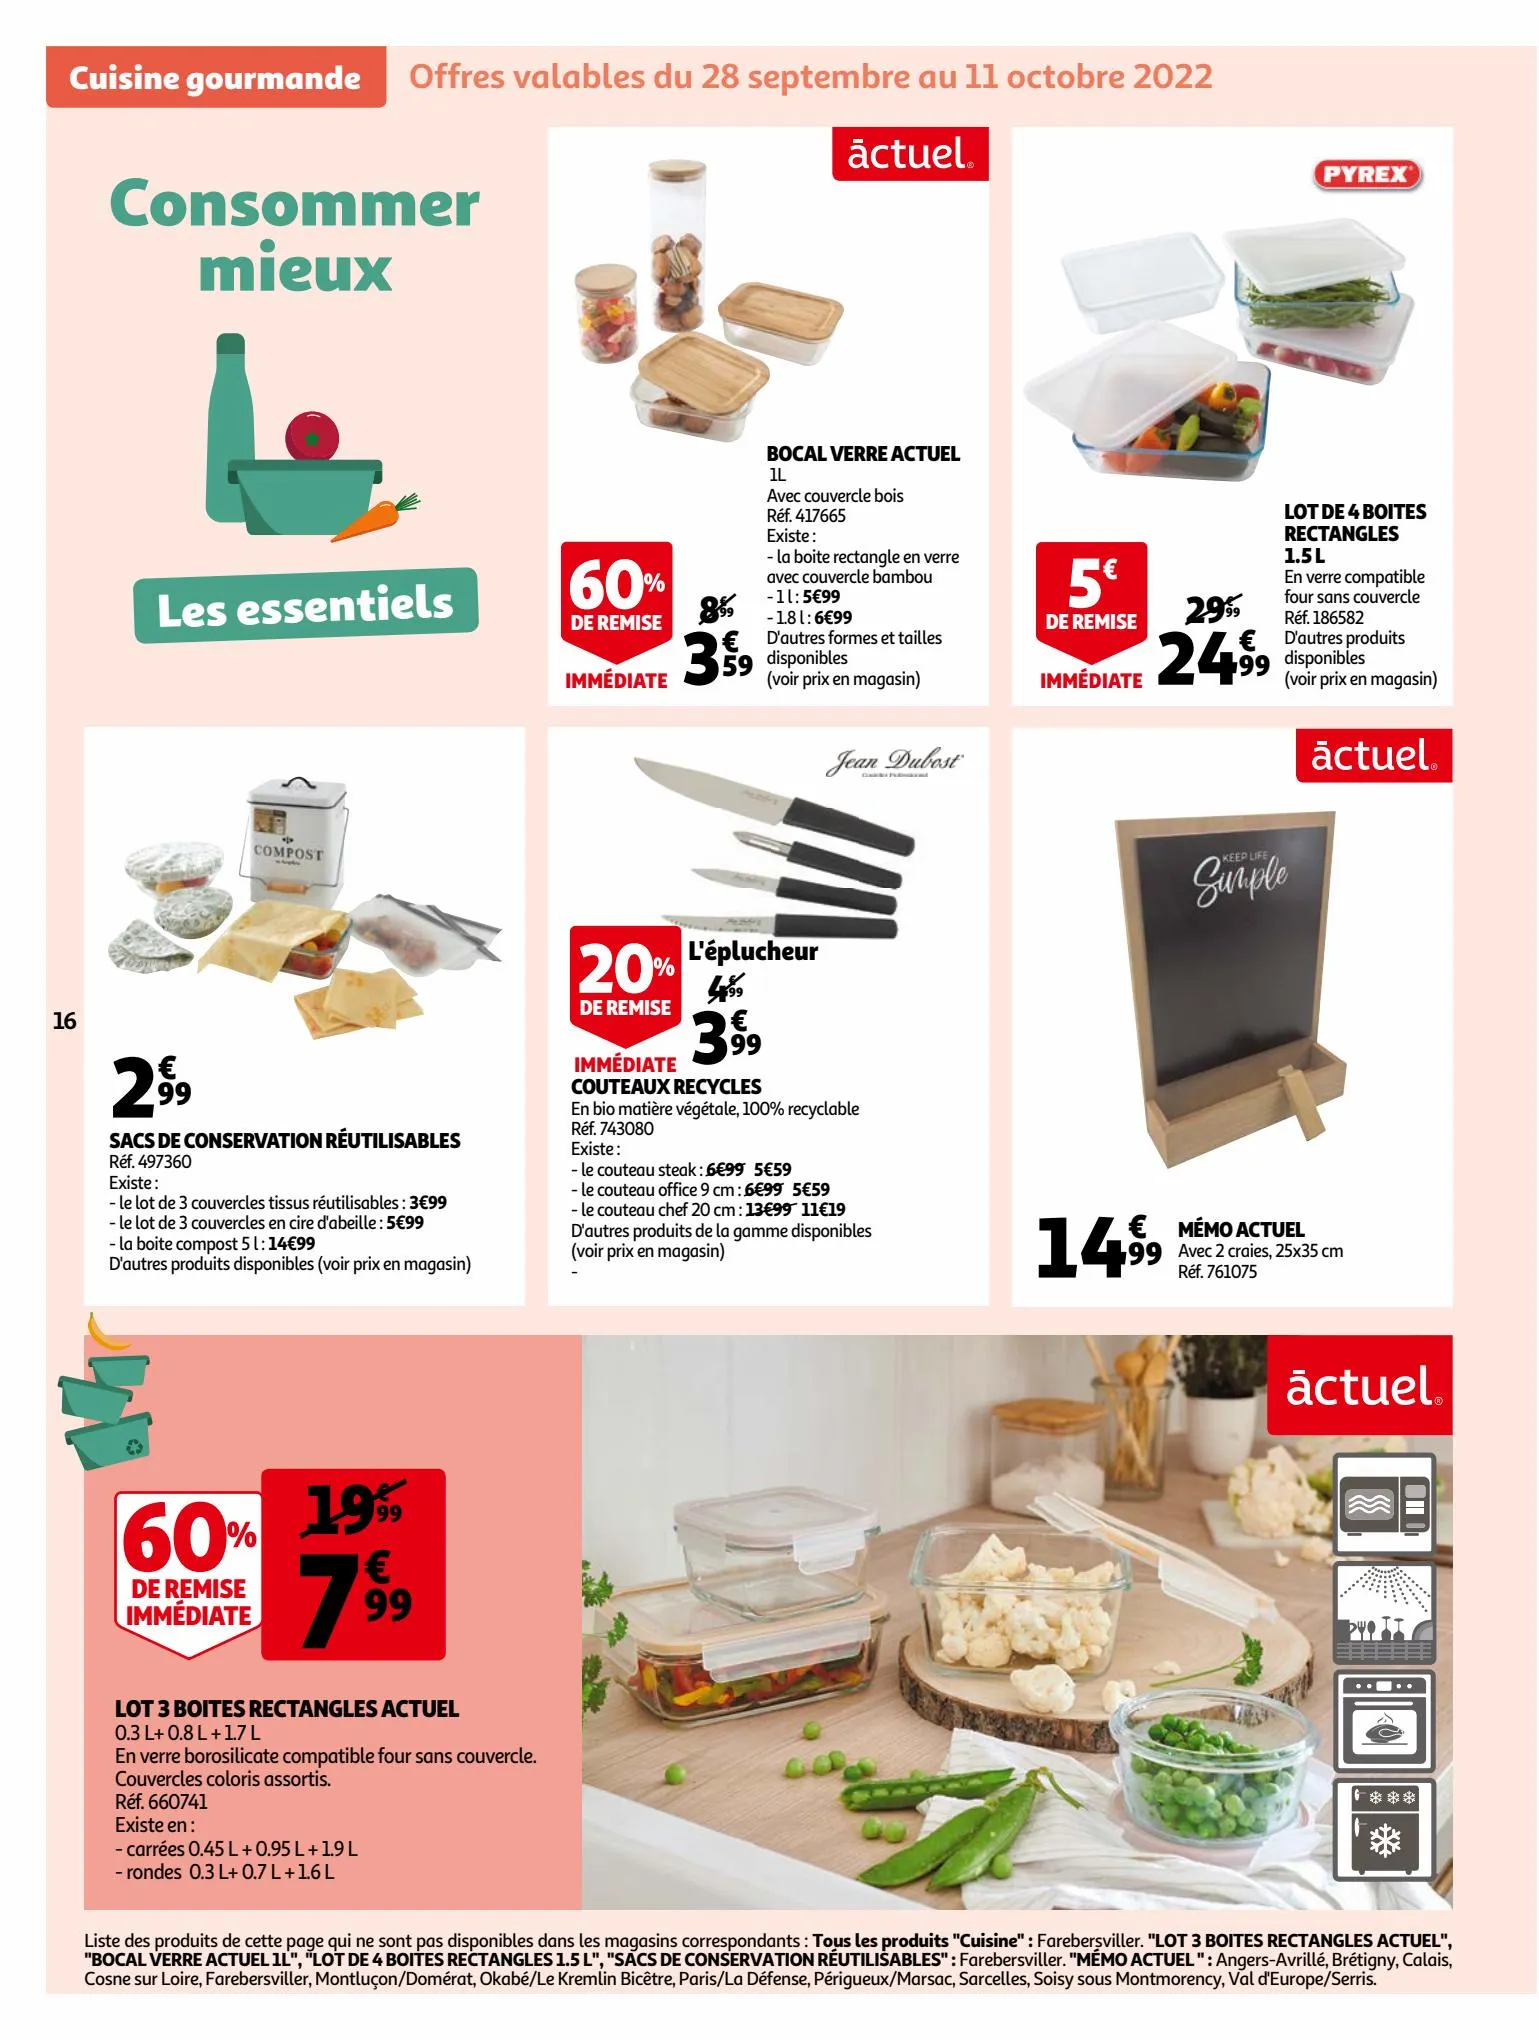 Catalogue Cuisine gourmande, page 00016